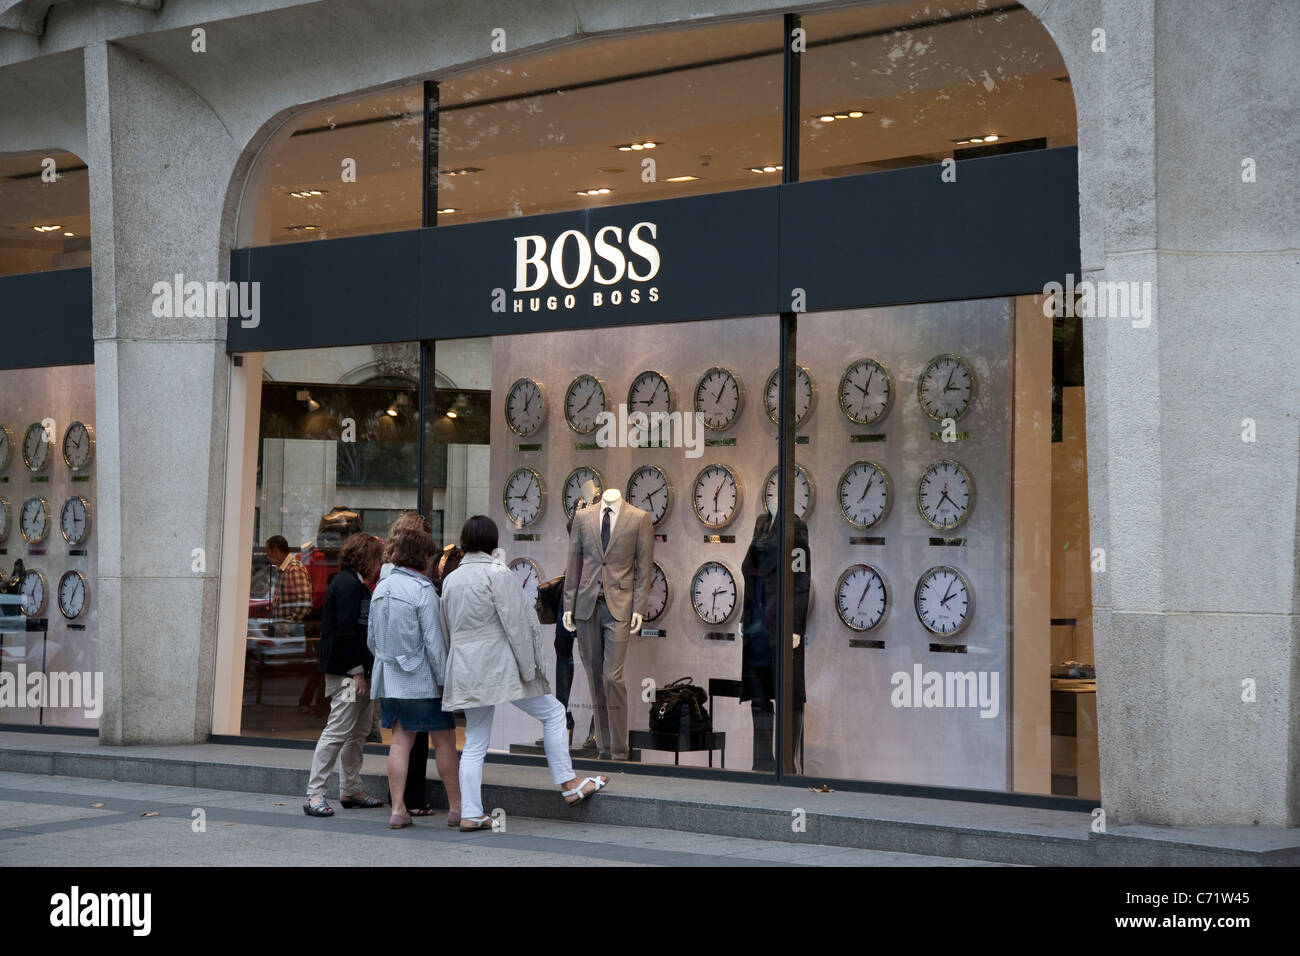 Hugo Boss Shop on Champs-Elysees, Paris, France Stock Photo - Alamy